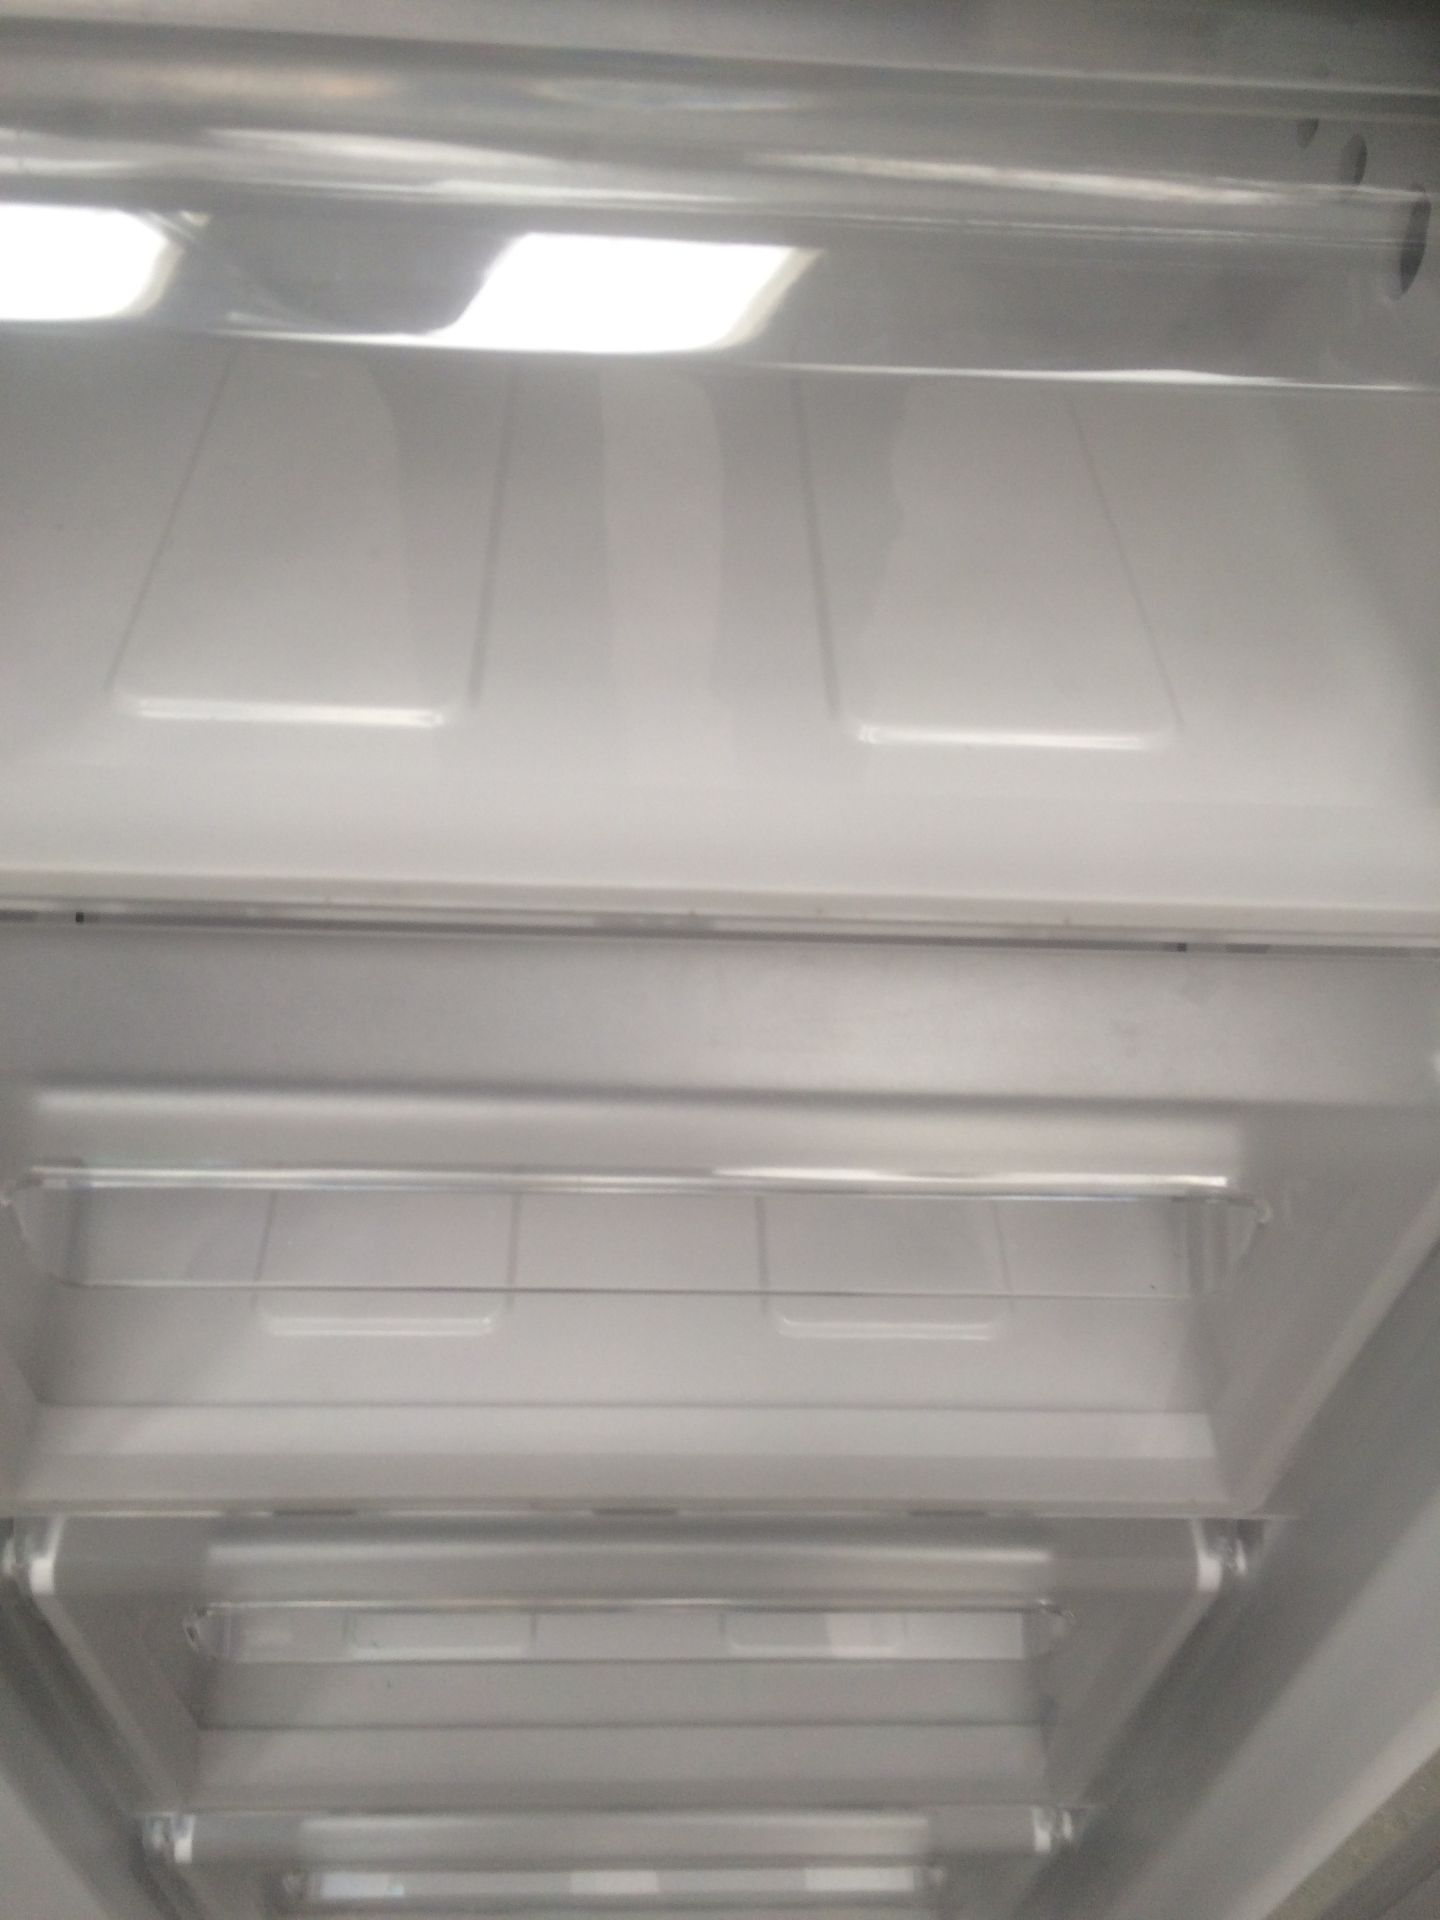 Fridgemaster freezer working 5 compartments 550mmX550mmX1440mm high - Image 3 of 3